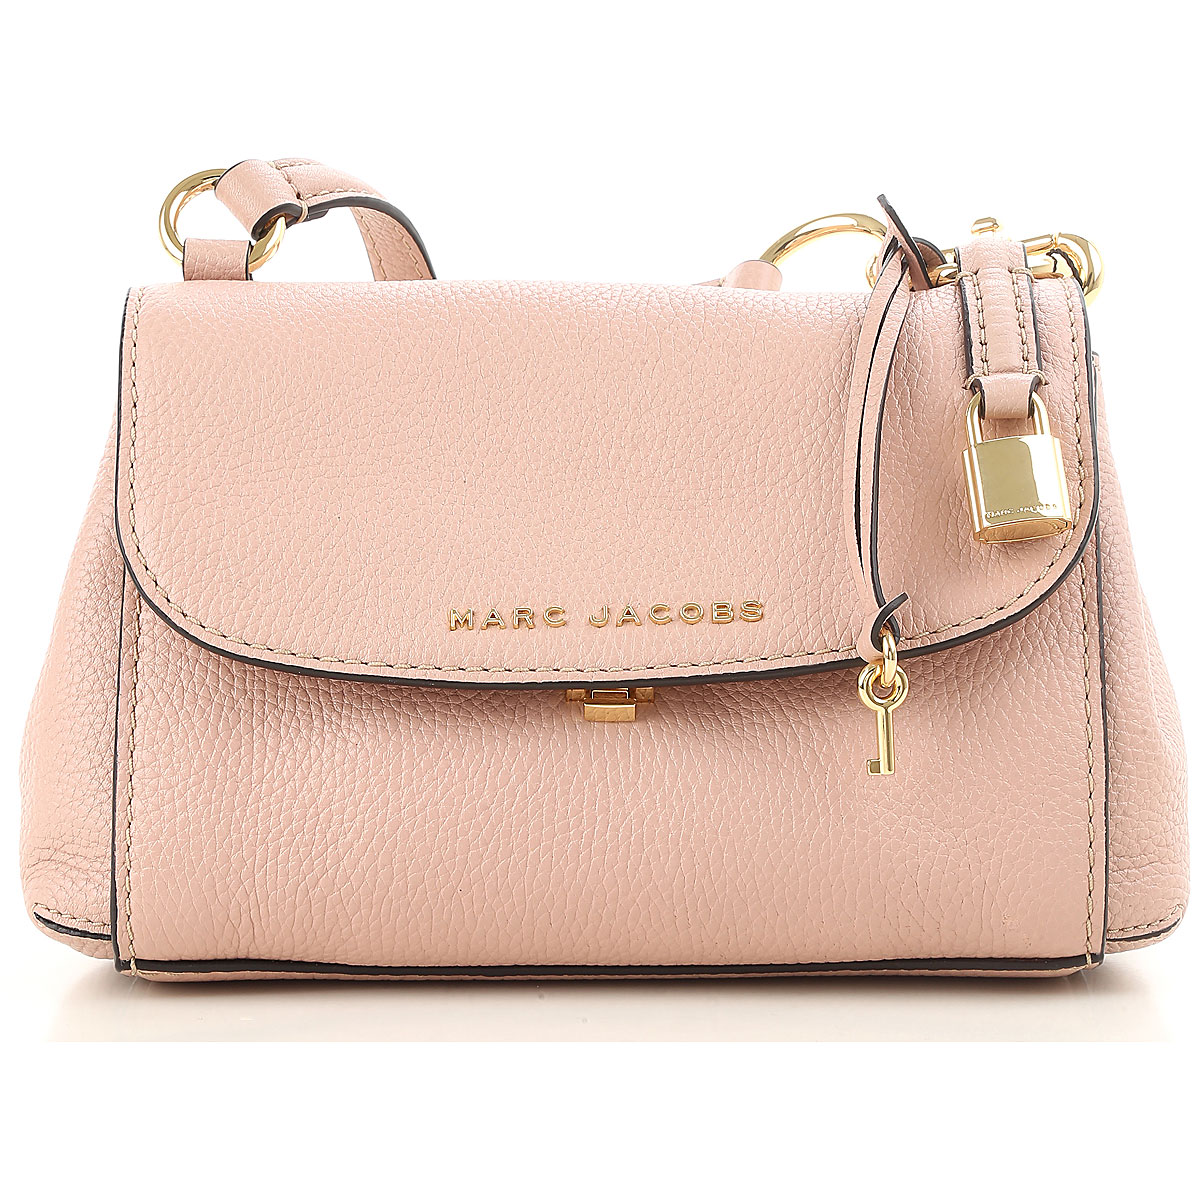 Handbags Marc Jacobs, Style code: m0013610-263-